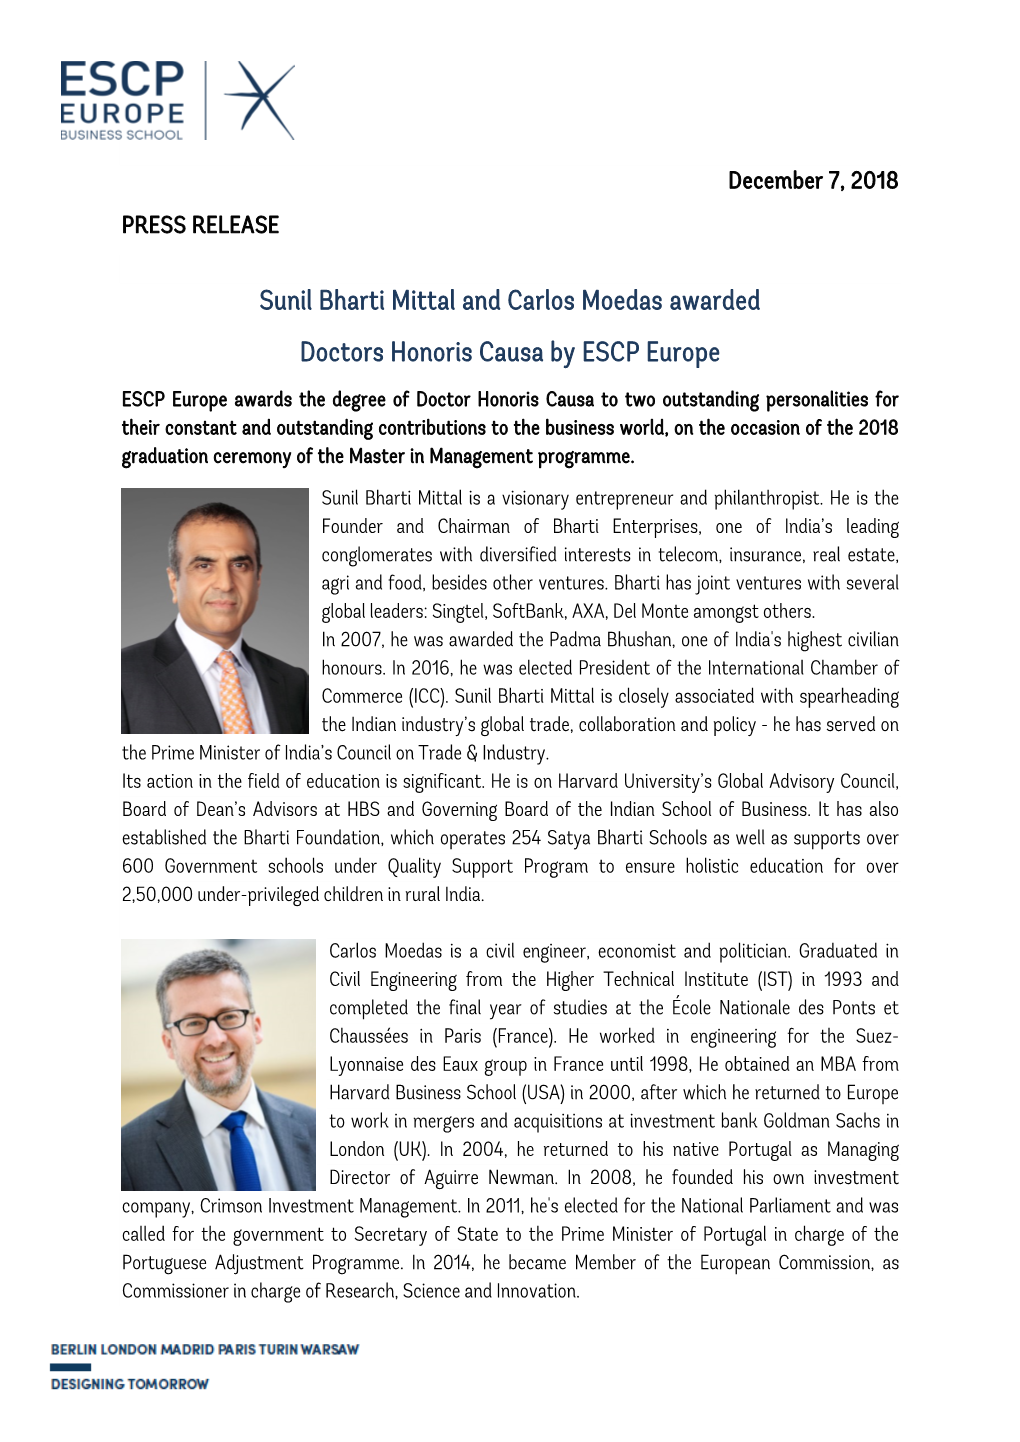 Sunil Bharti Mittal and Carlos Moedas Awarded Doctors Honoris Causa by ESCP Europe